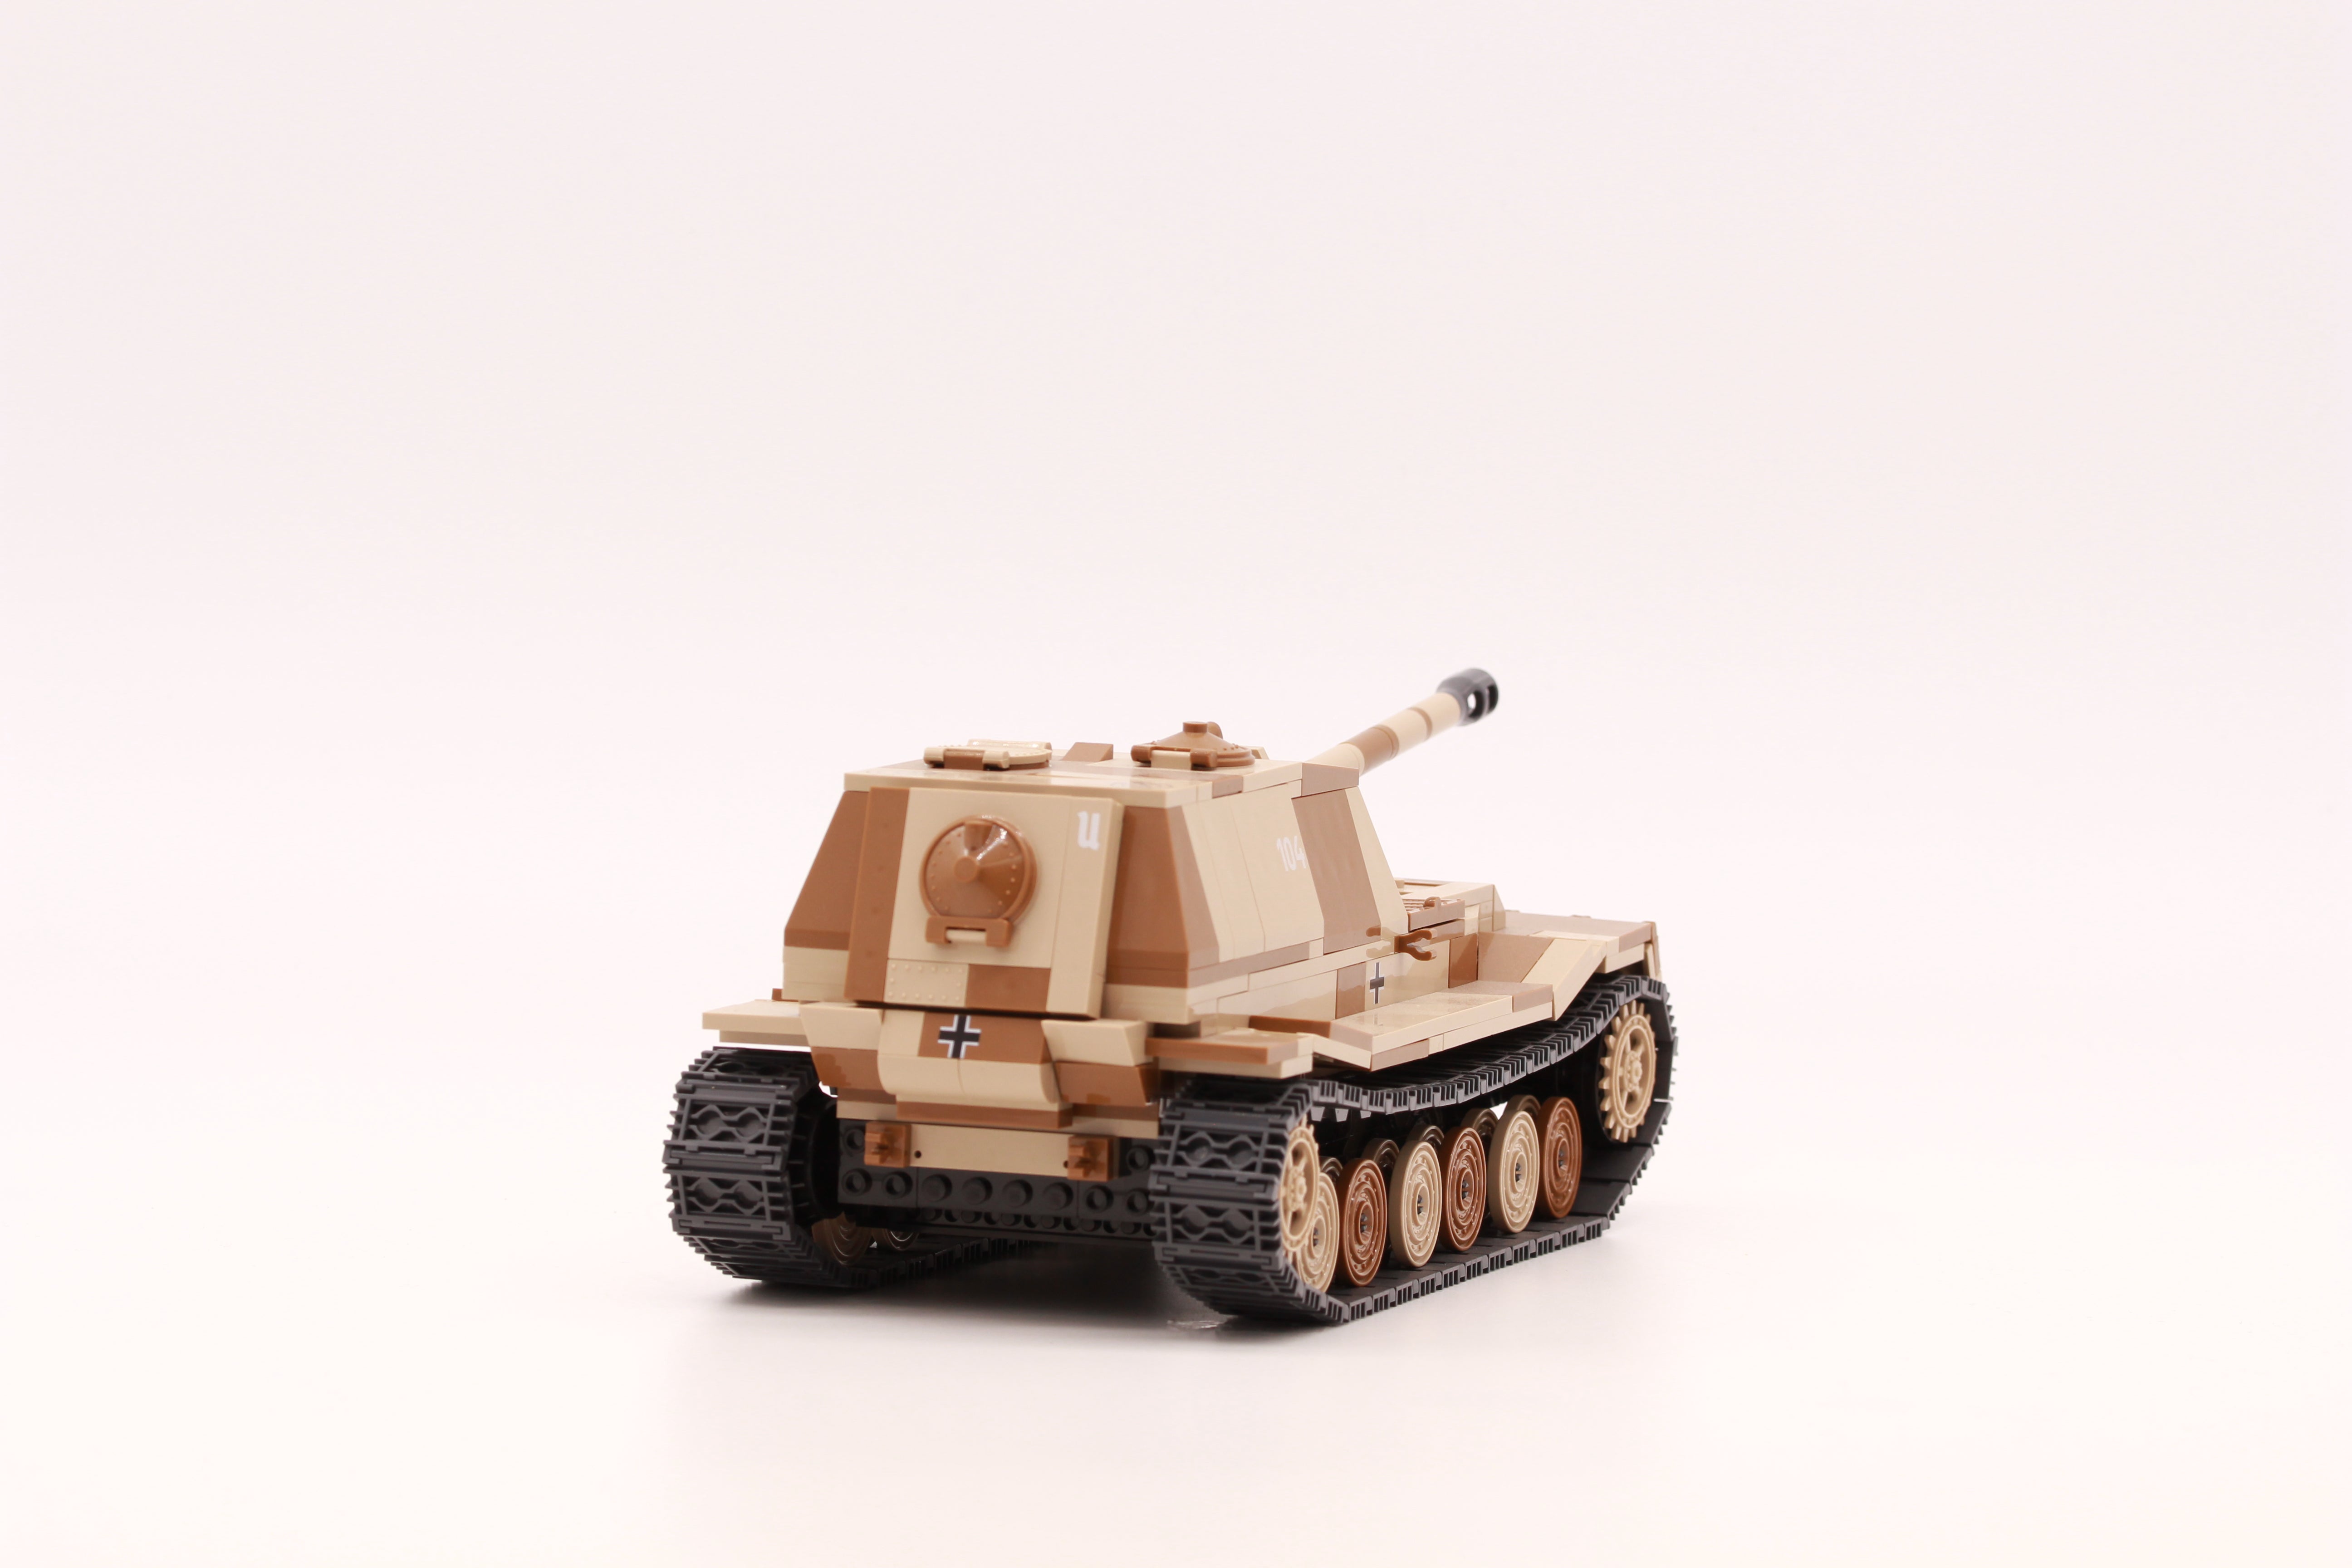 Panzerjäger Tiger (P)